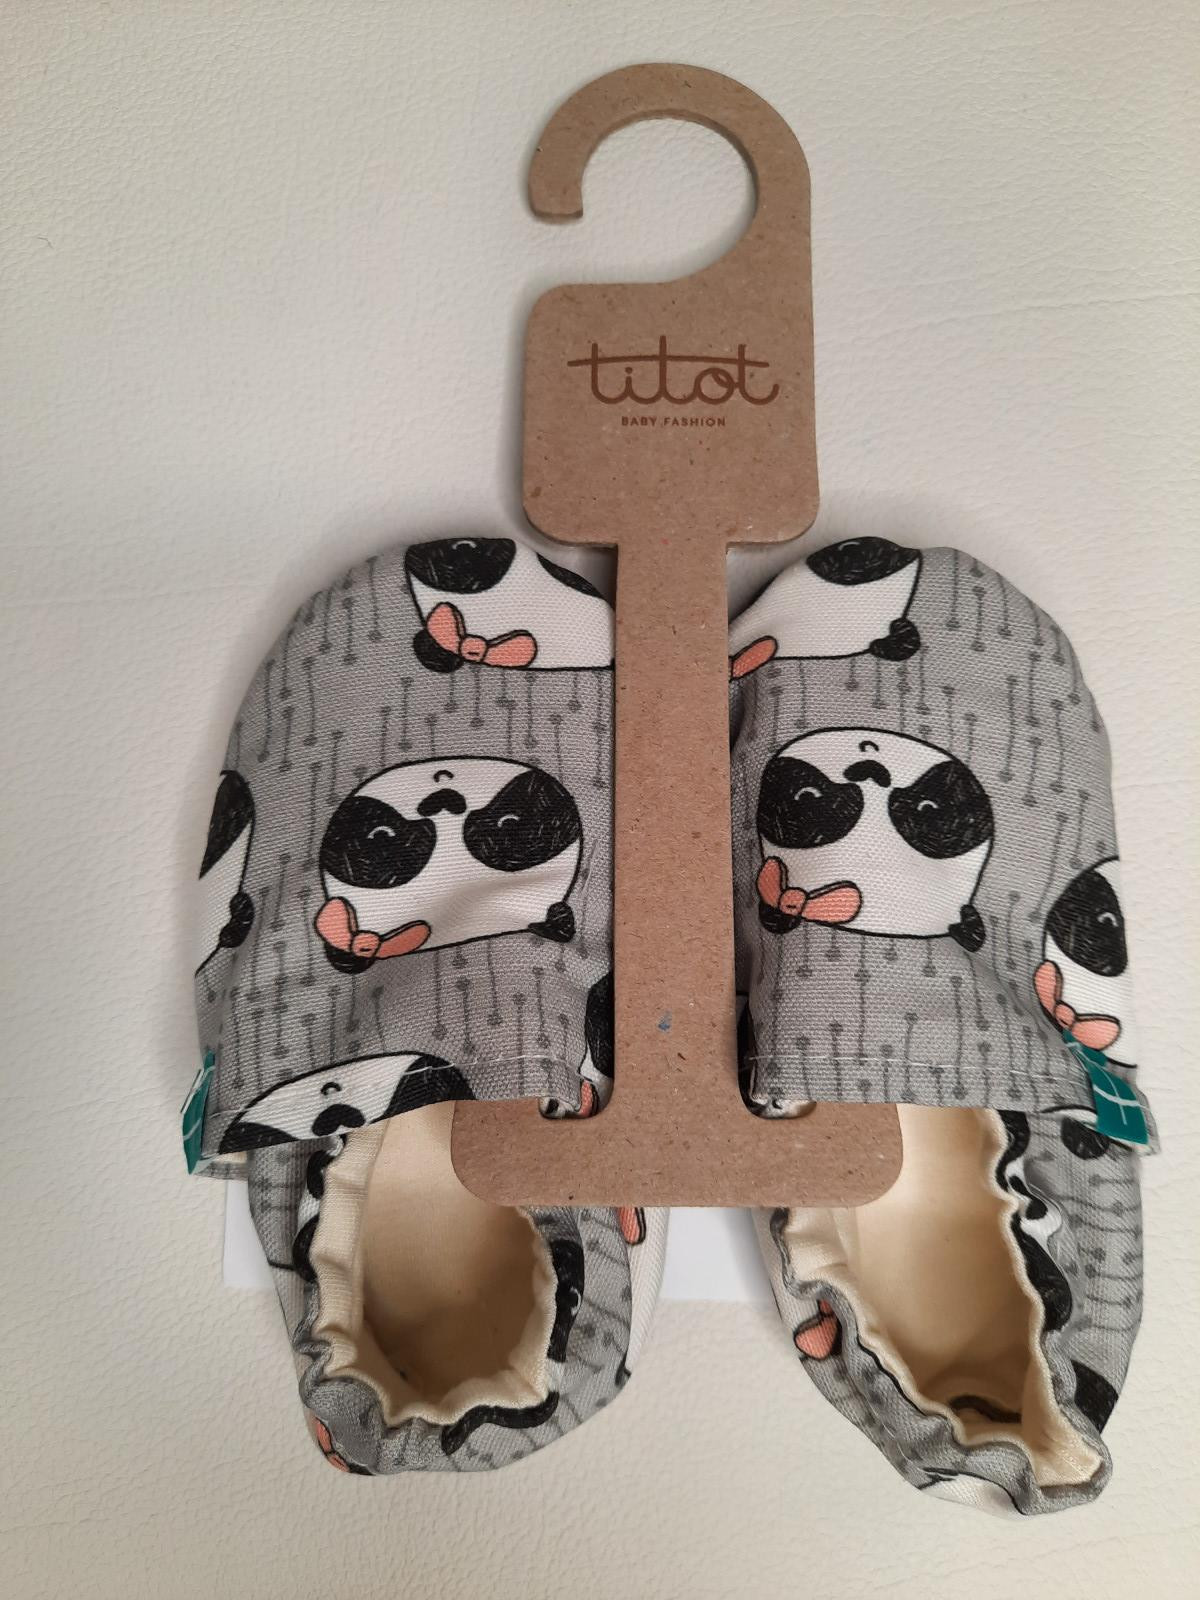 Chaussons TITOT - Panda gris - Boutique Toup'tibou - photo 6